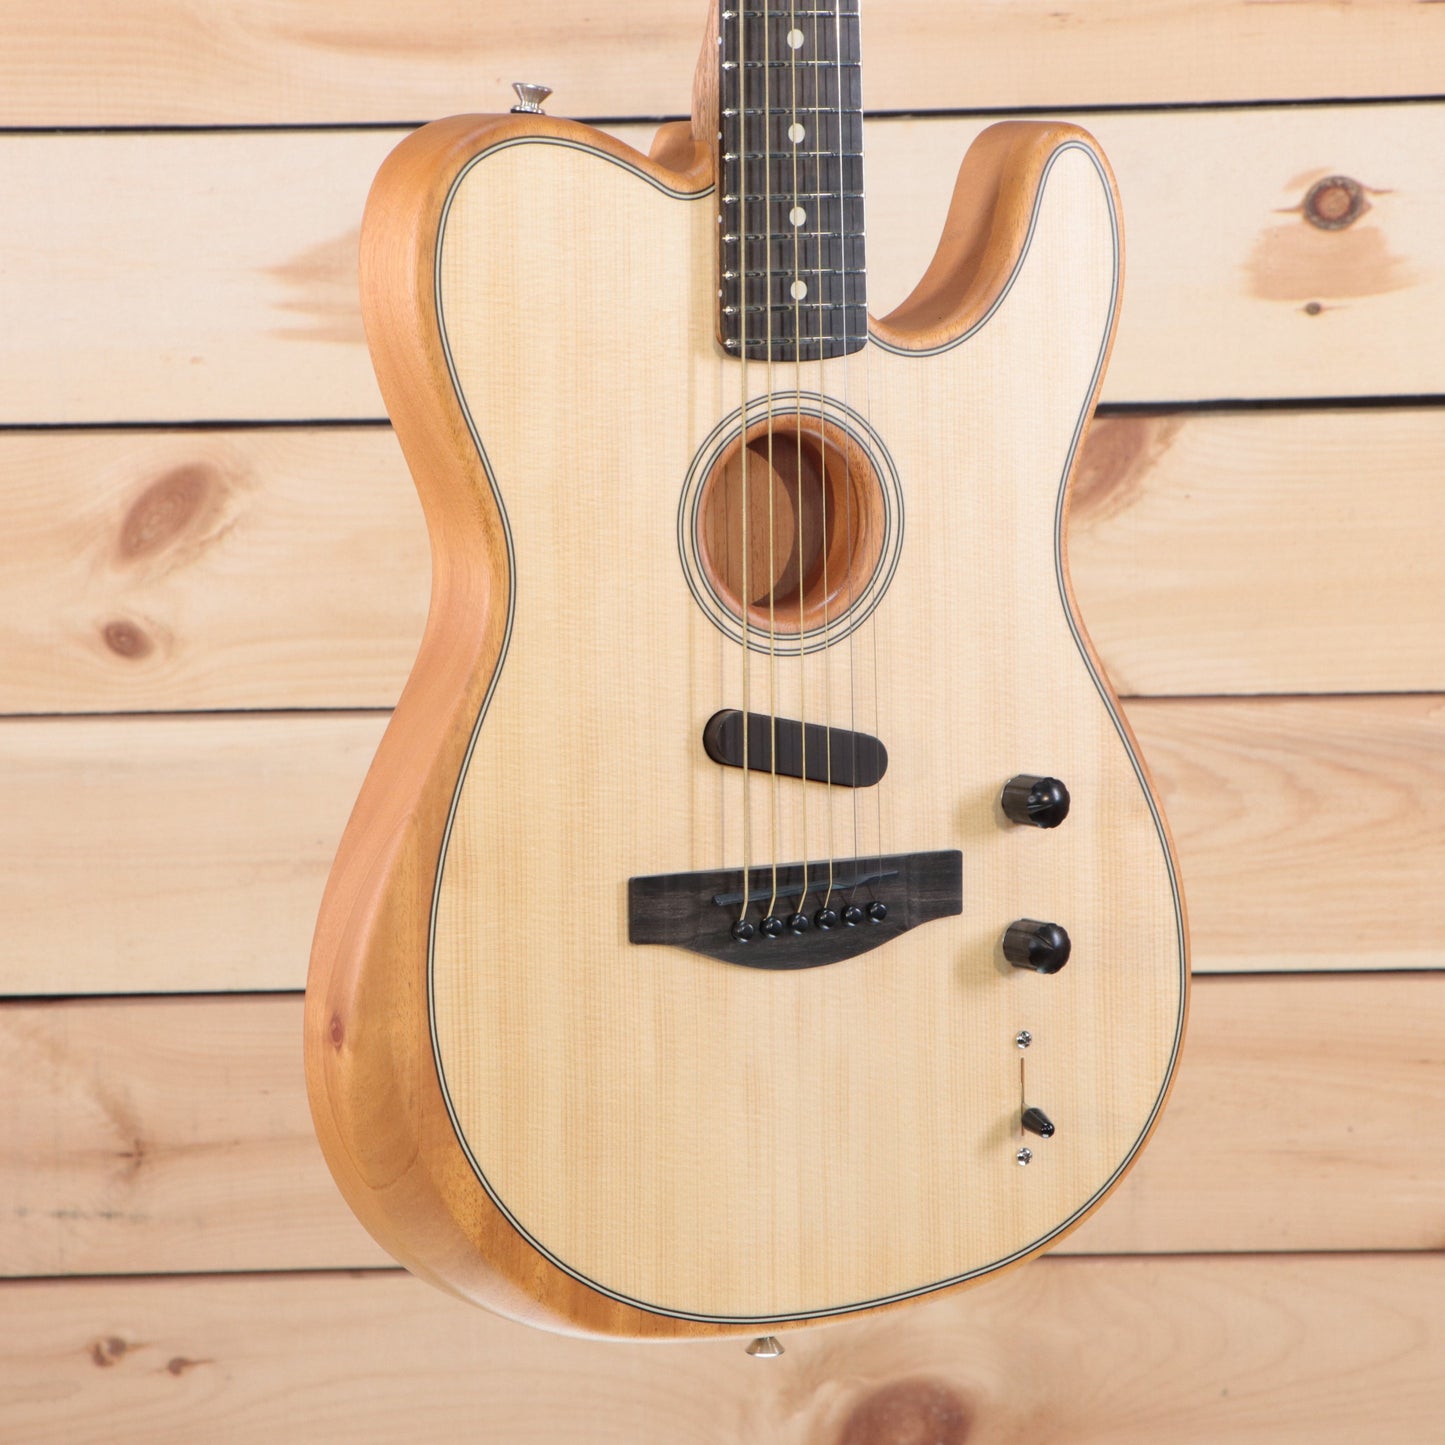 Fender American Acoustasonic Telecaster - Express Shipping - (F-484) Serial: US225050 - PLEK'd-1-Righteous Guitars